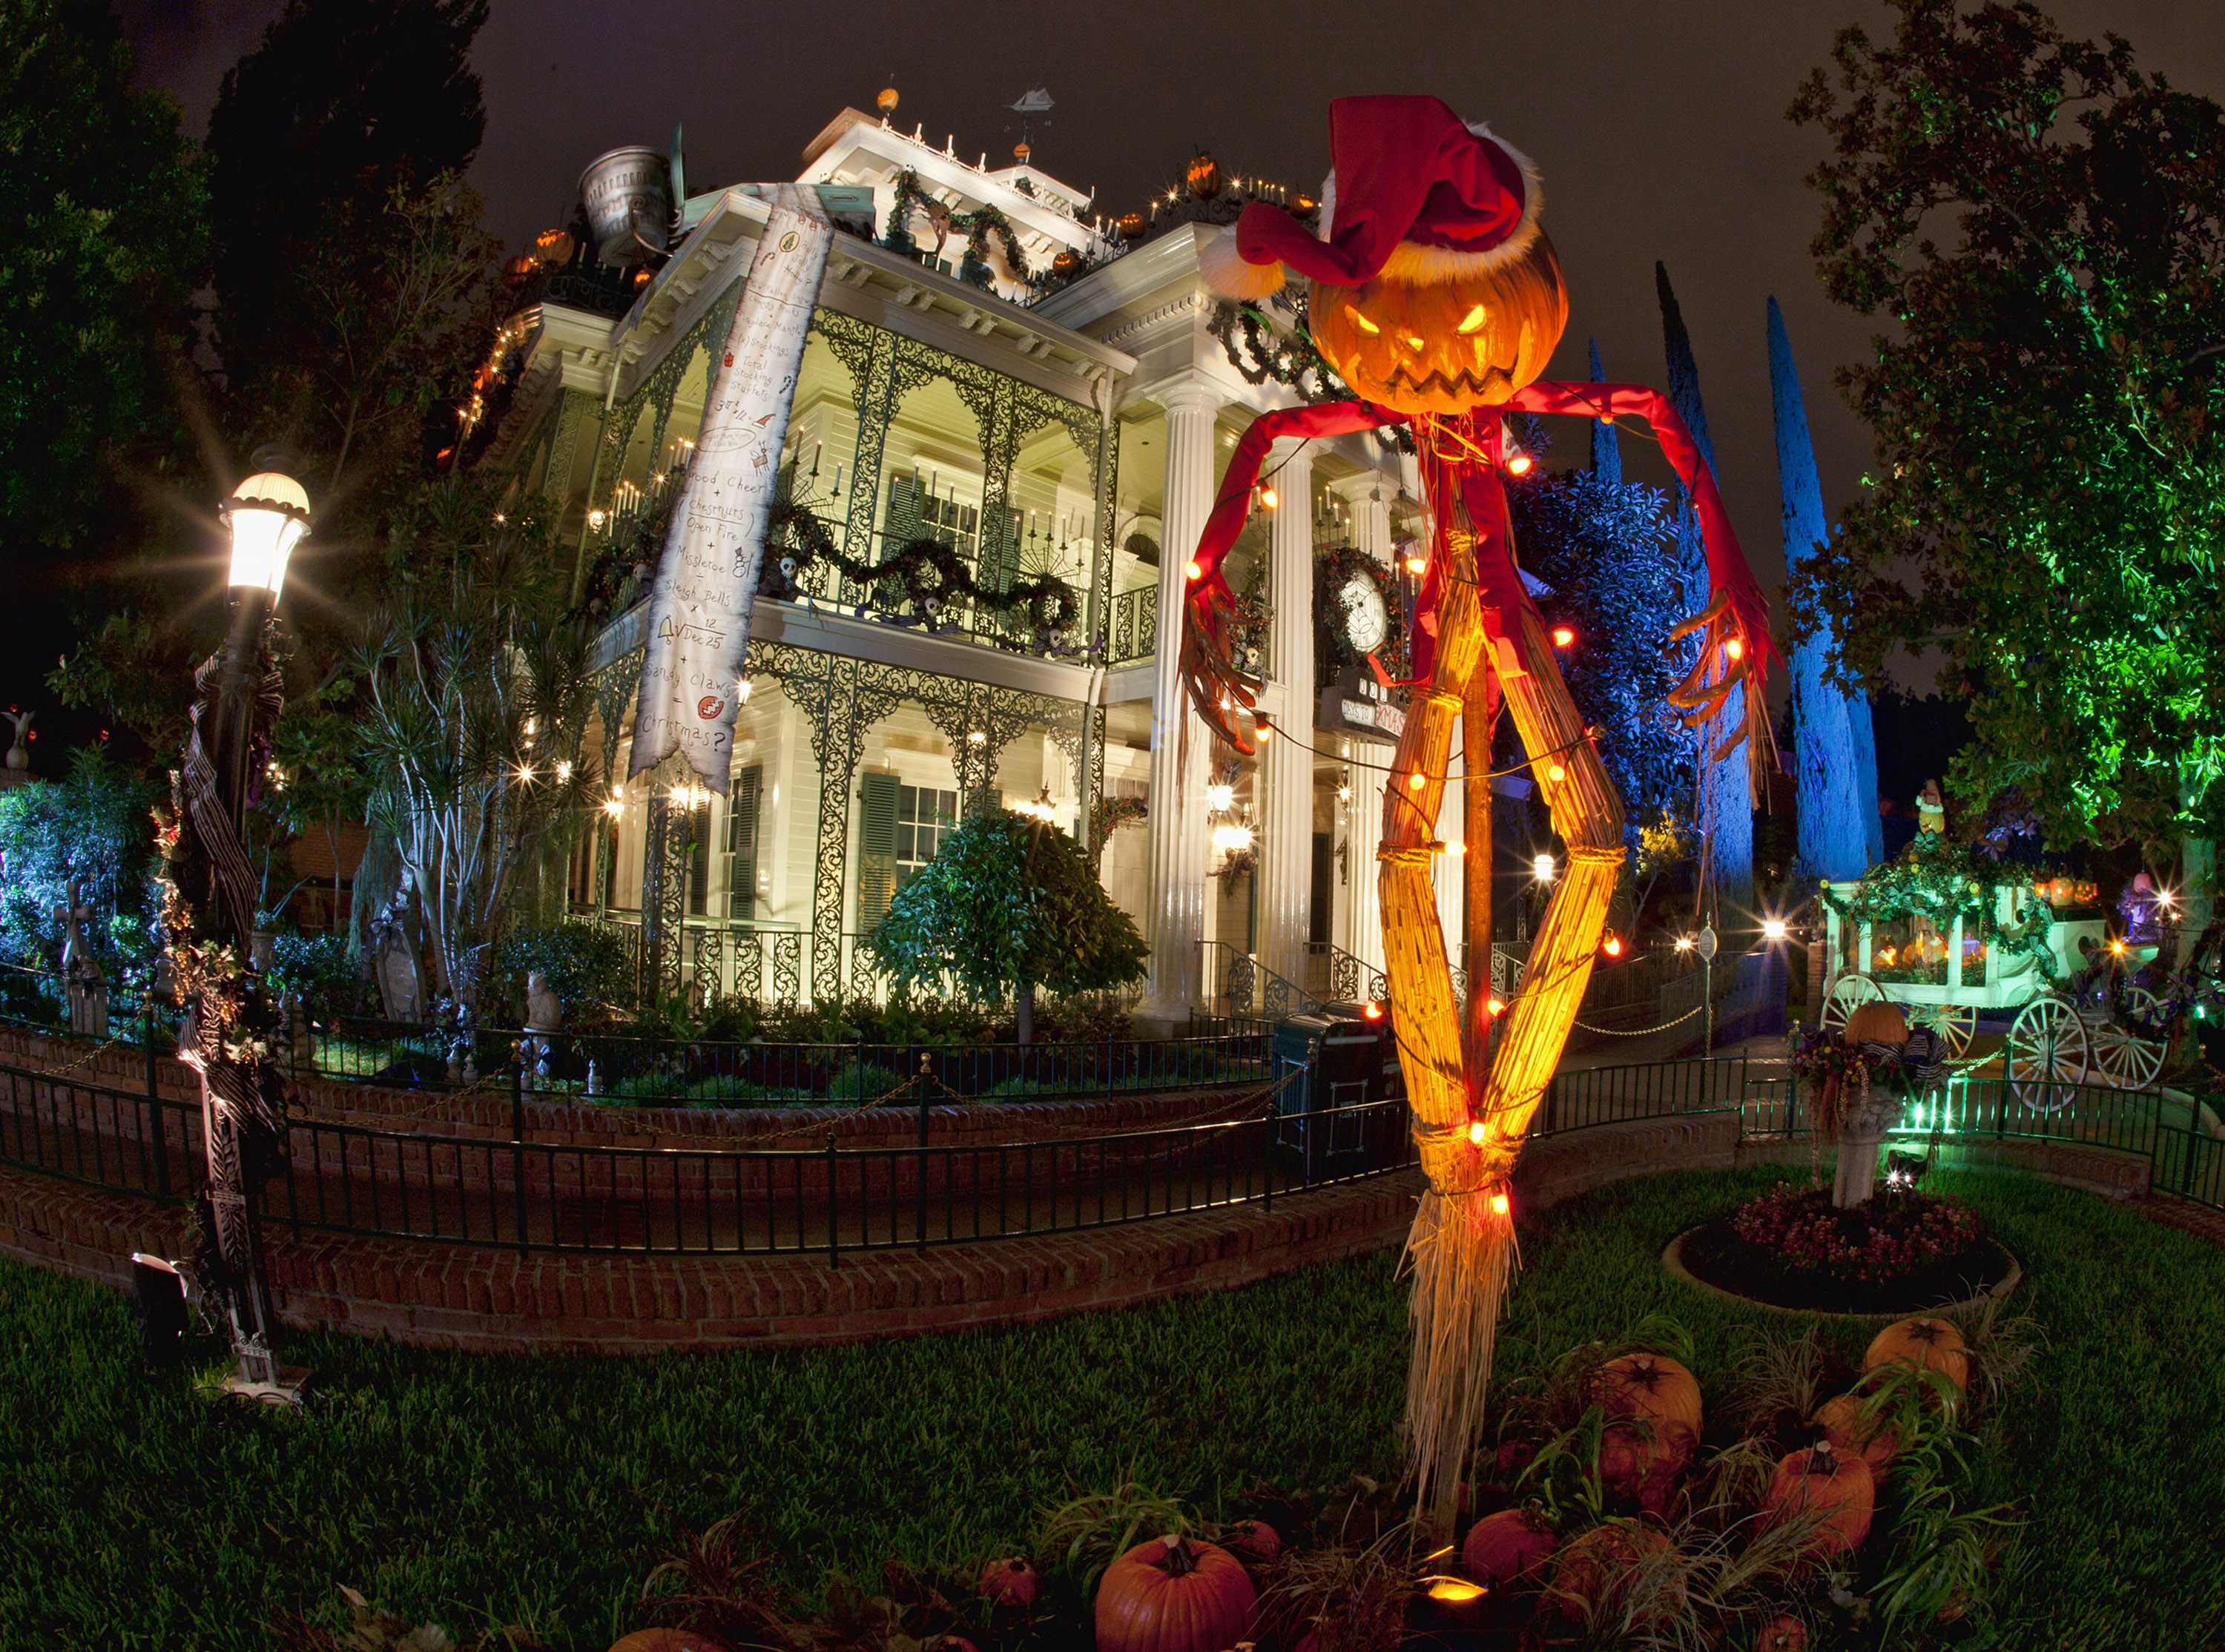 Jack Skellington Kicks off The 2018 Halloween Season As He Makes His Home in Haunted Mansion Holiday at the Disneyland Resort